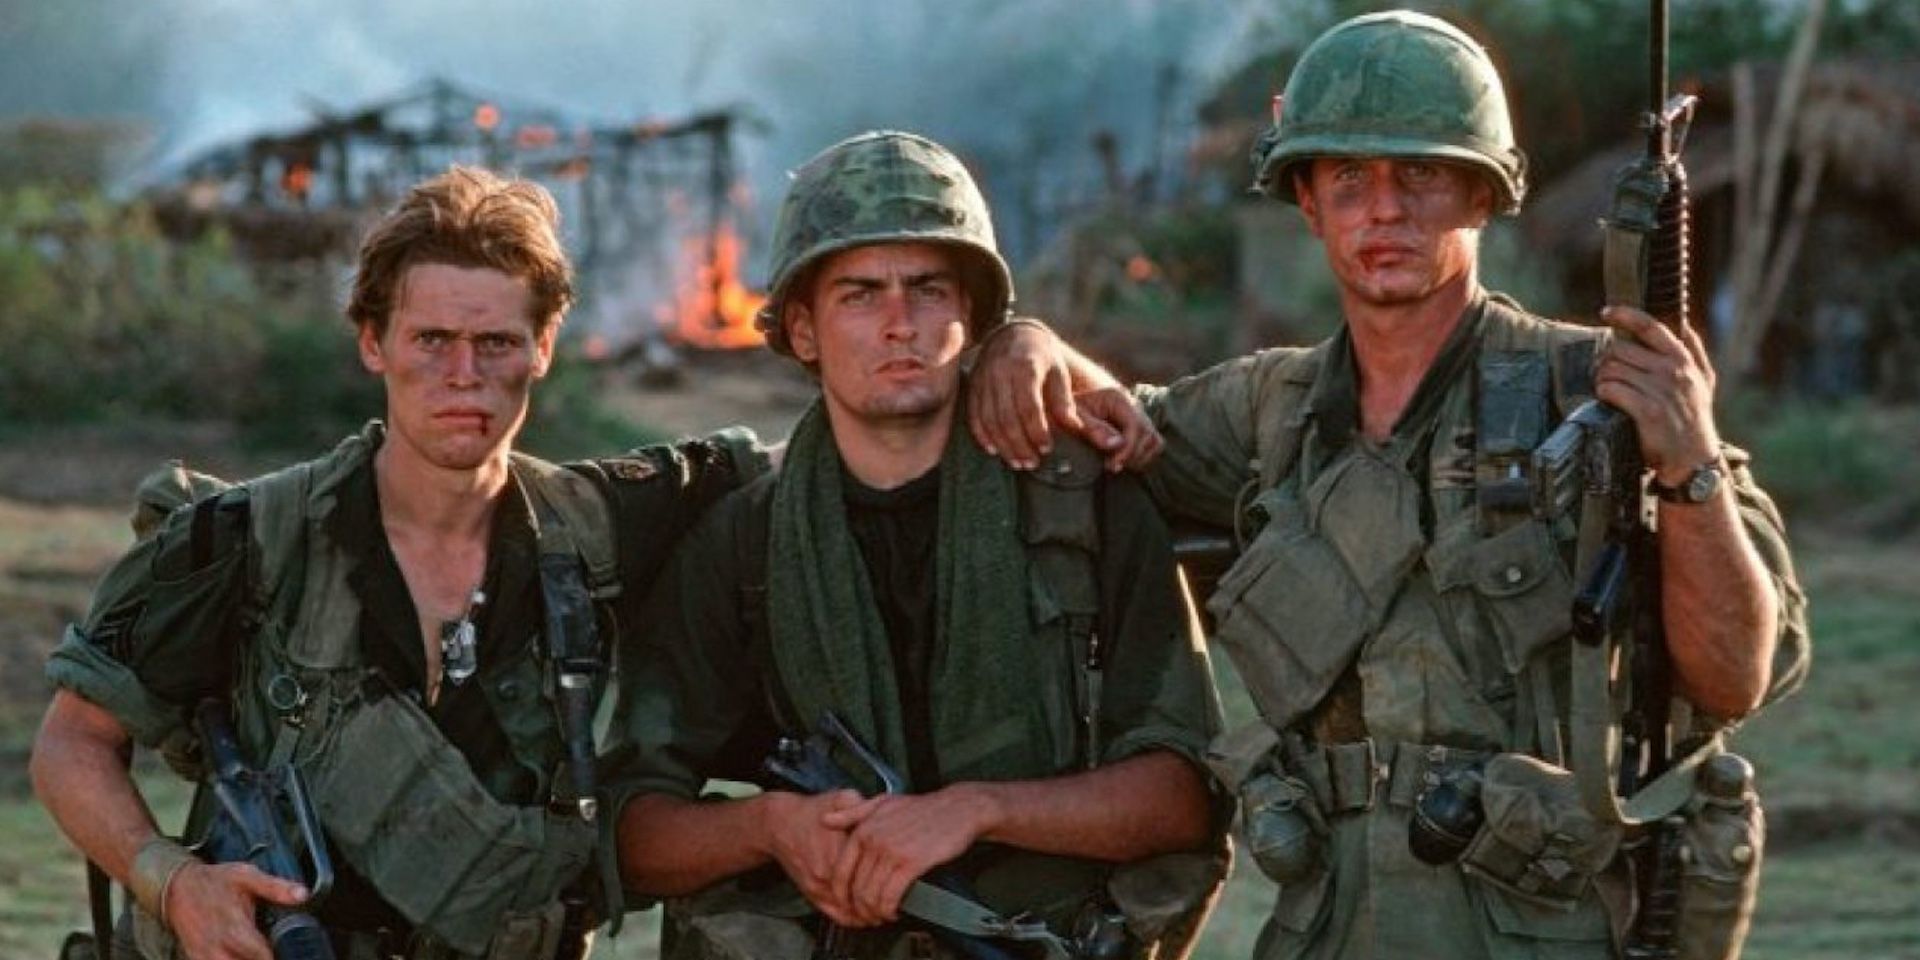 Willem Dafoe, Charlie Sheen, and Tom Berenger in Platoon